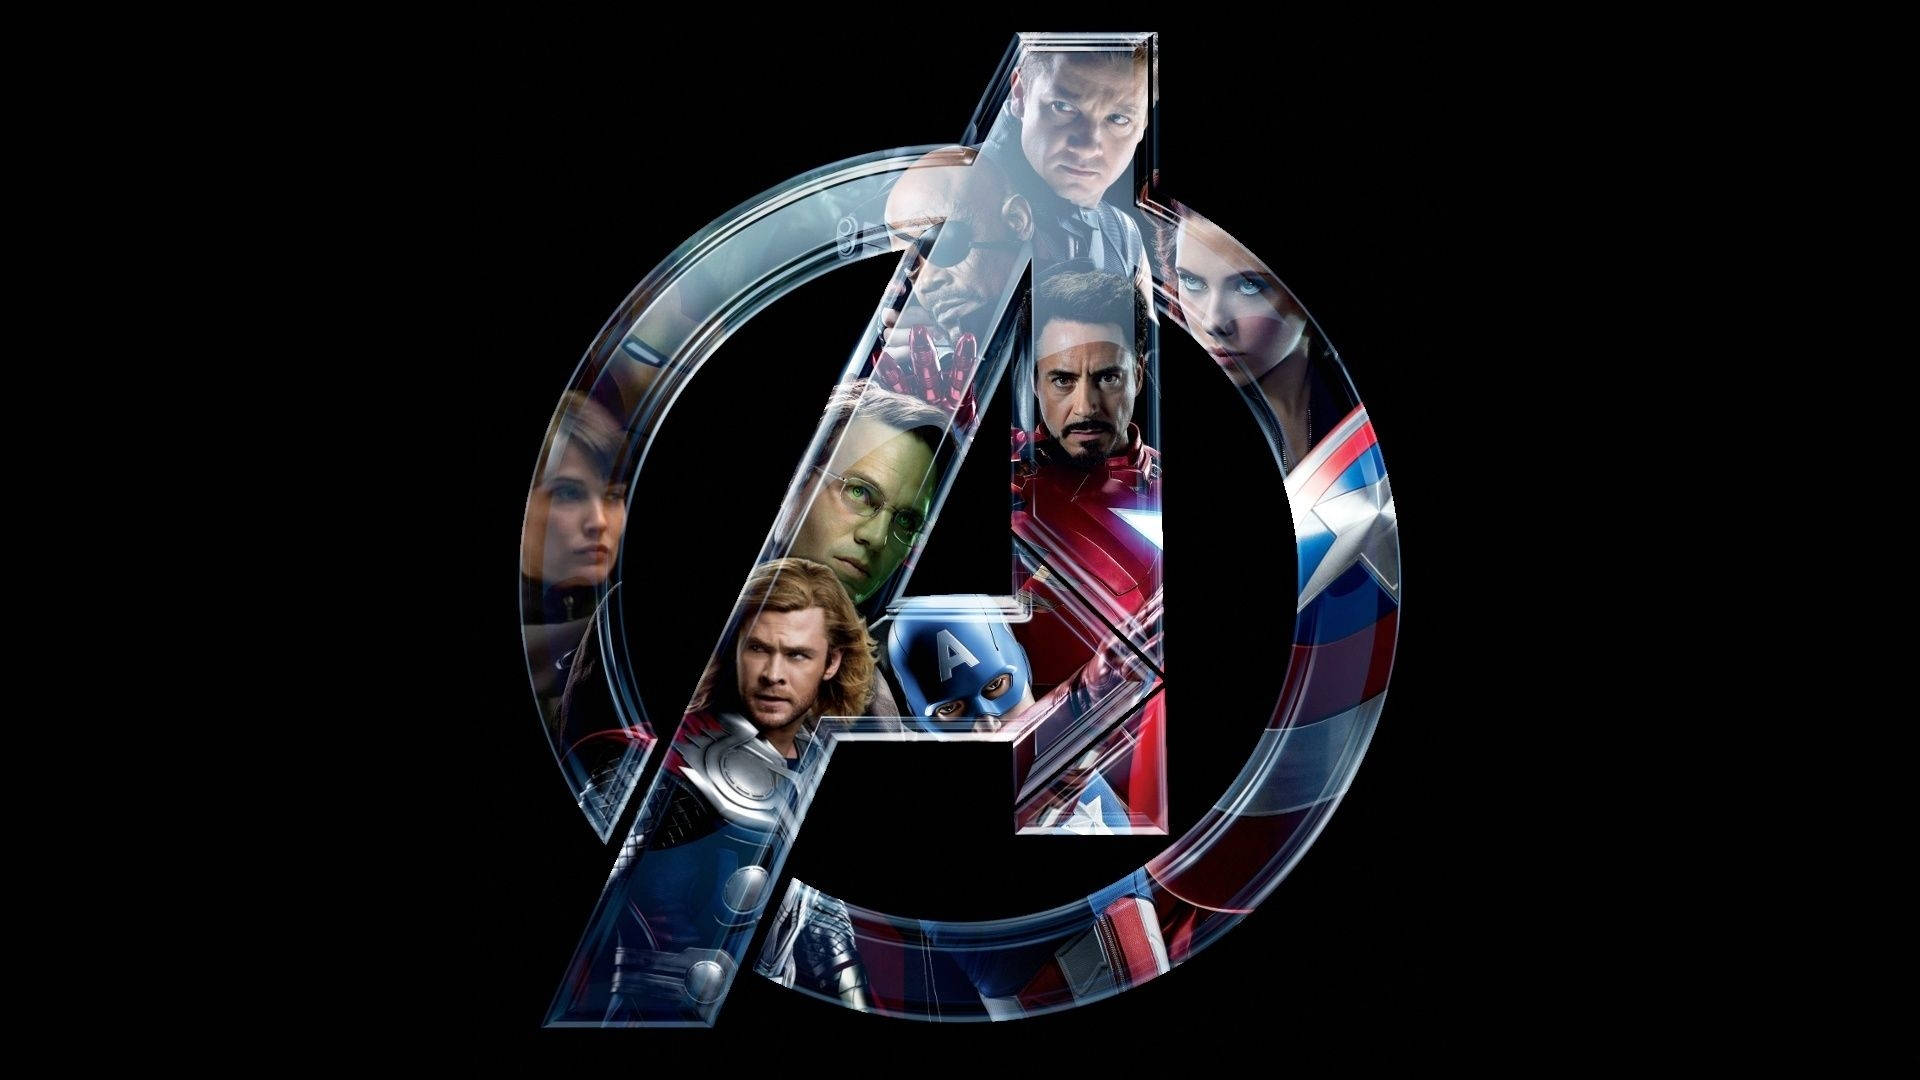 Avengerssuperhelden Im Logo Für Den Desktop Wallpaper